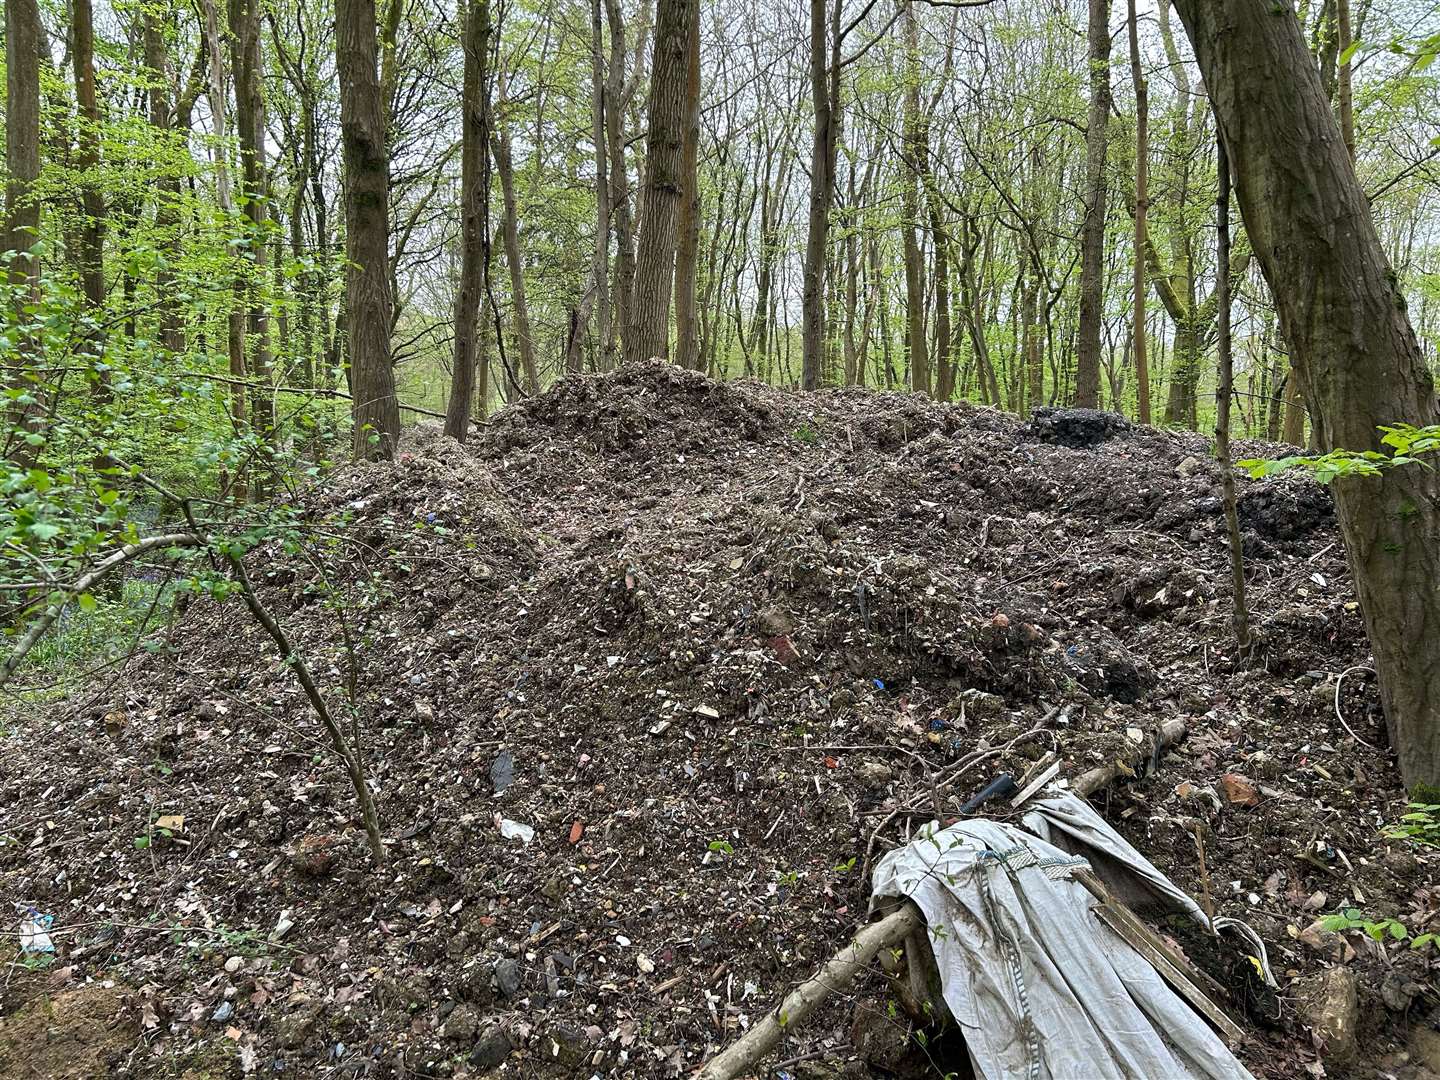 Stinking rubbish is piled high in Hoads Wood, Ashford